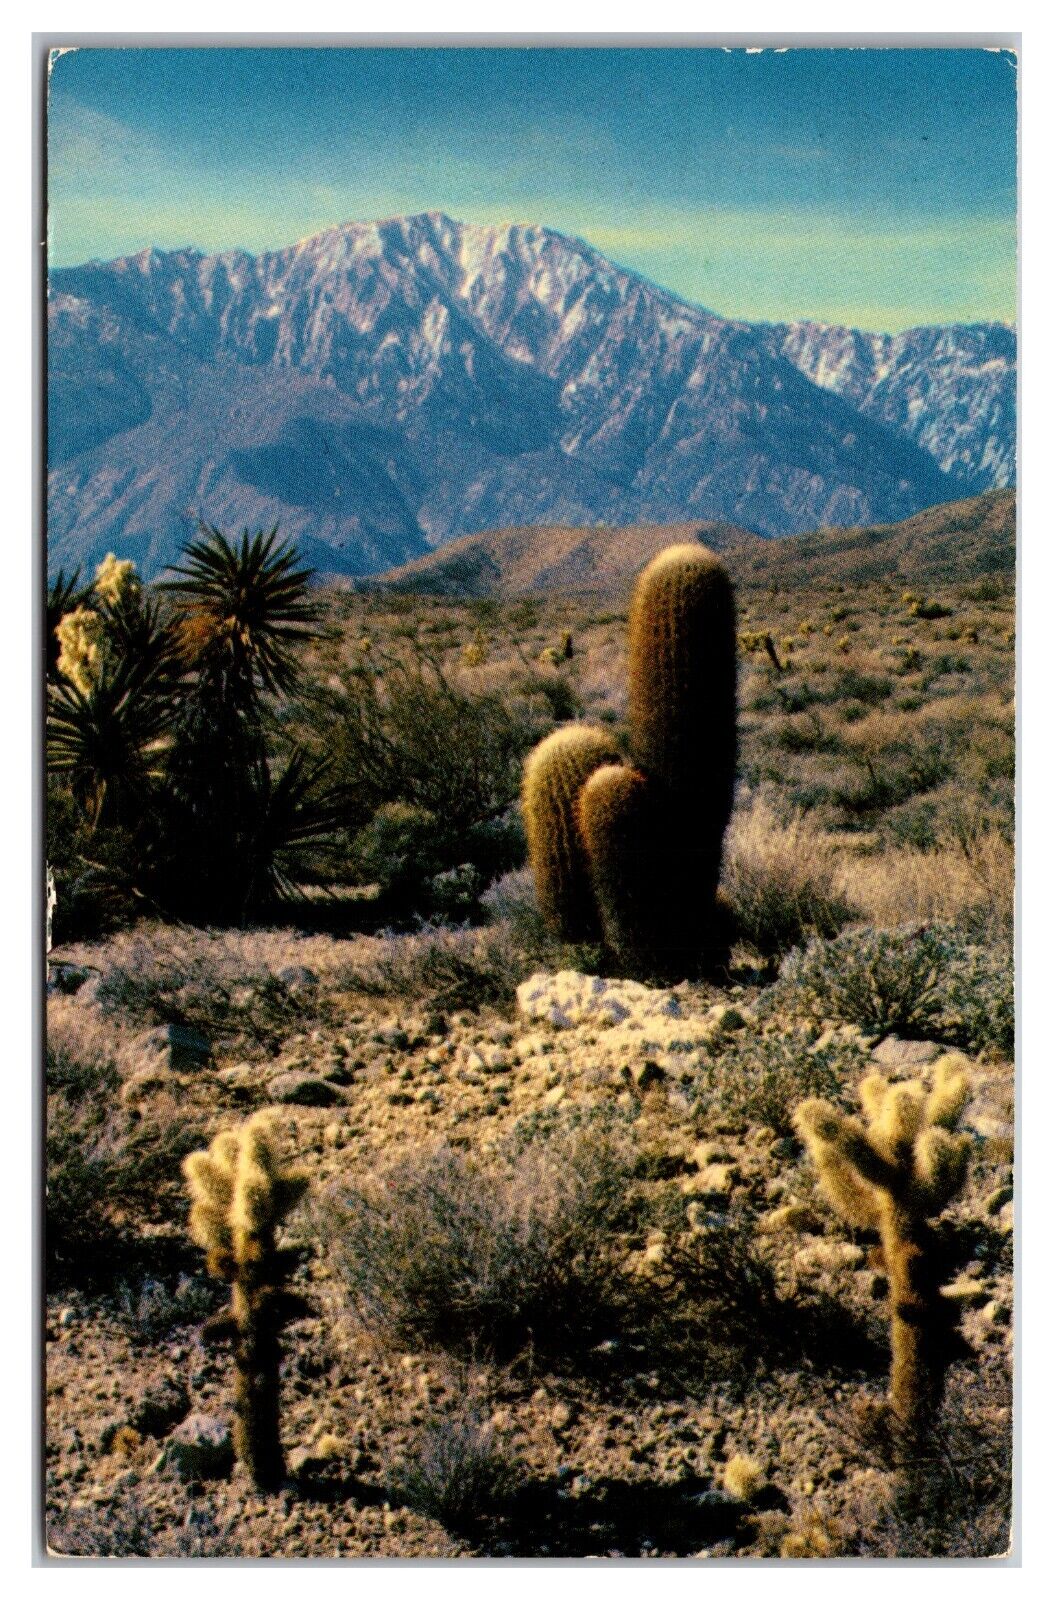 A Desert Panorama - The Cholla Cactus, The Barrel Cactus, Mojave Yucca 